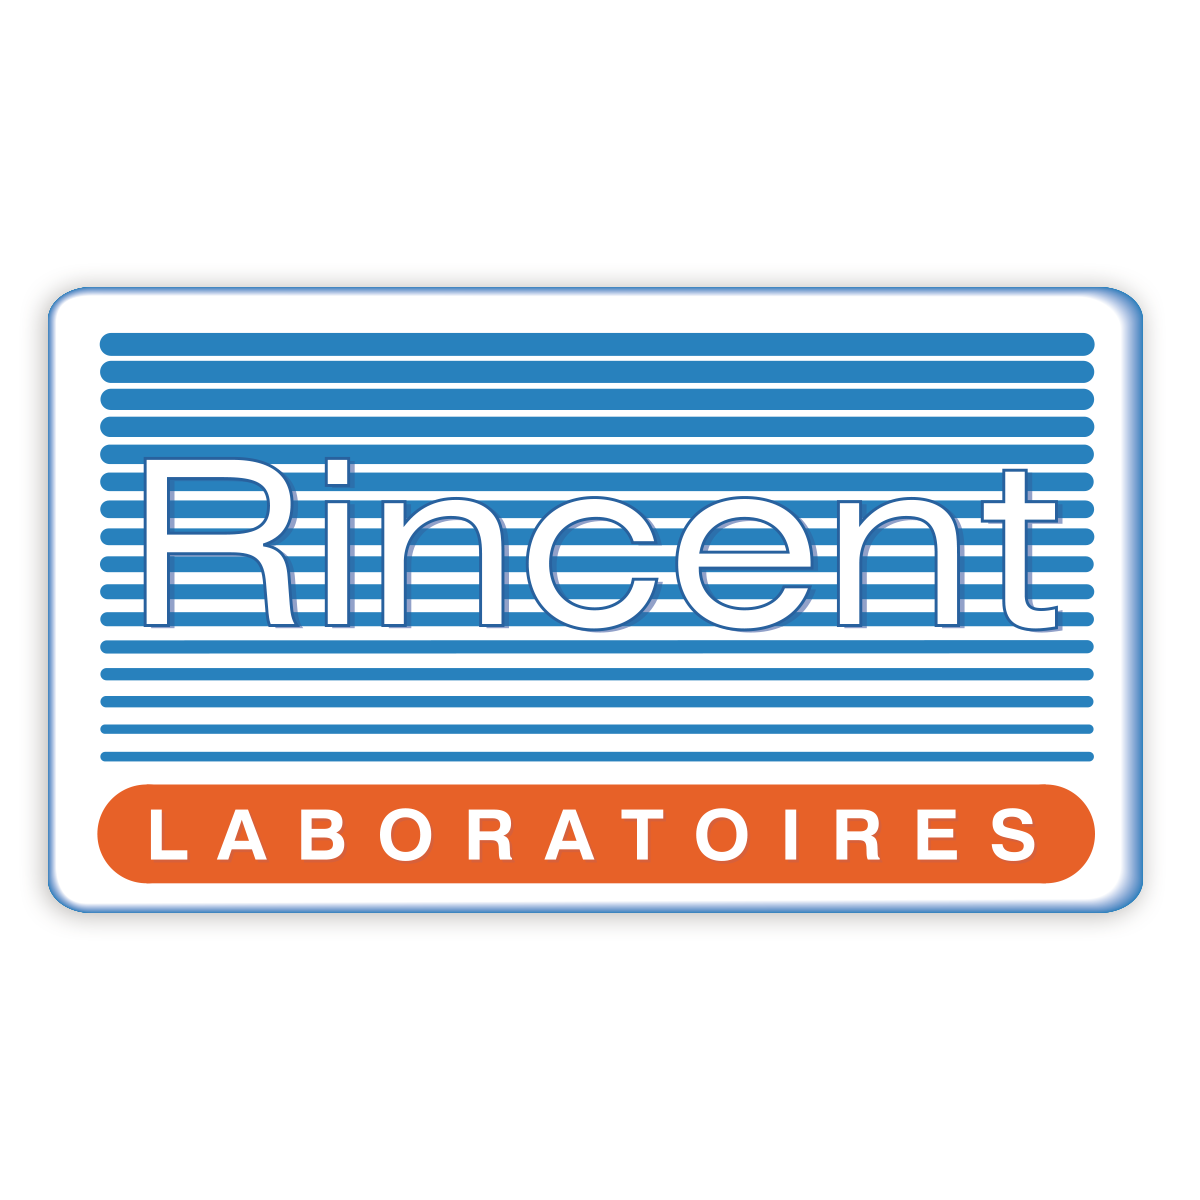 Rincent Laboratoires - Technicien (H/F) CDI